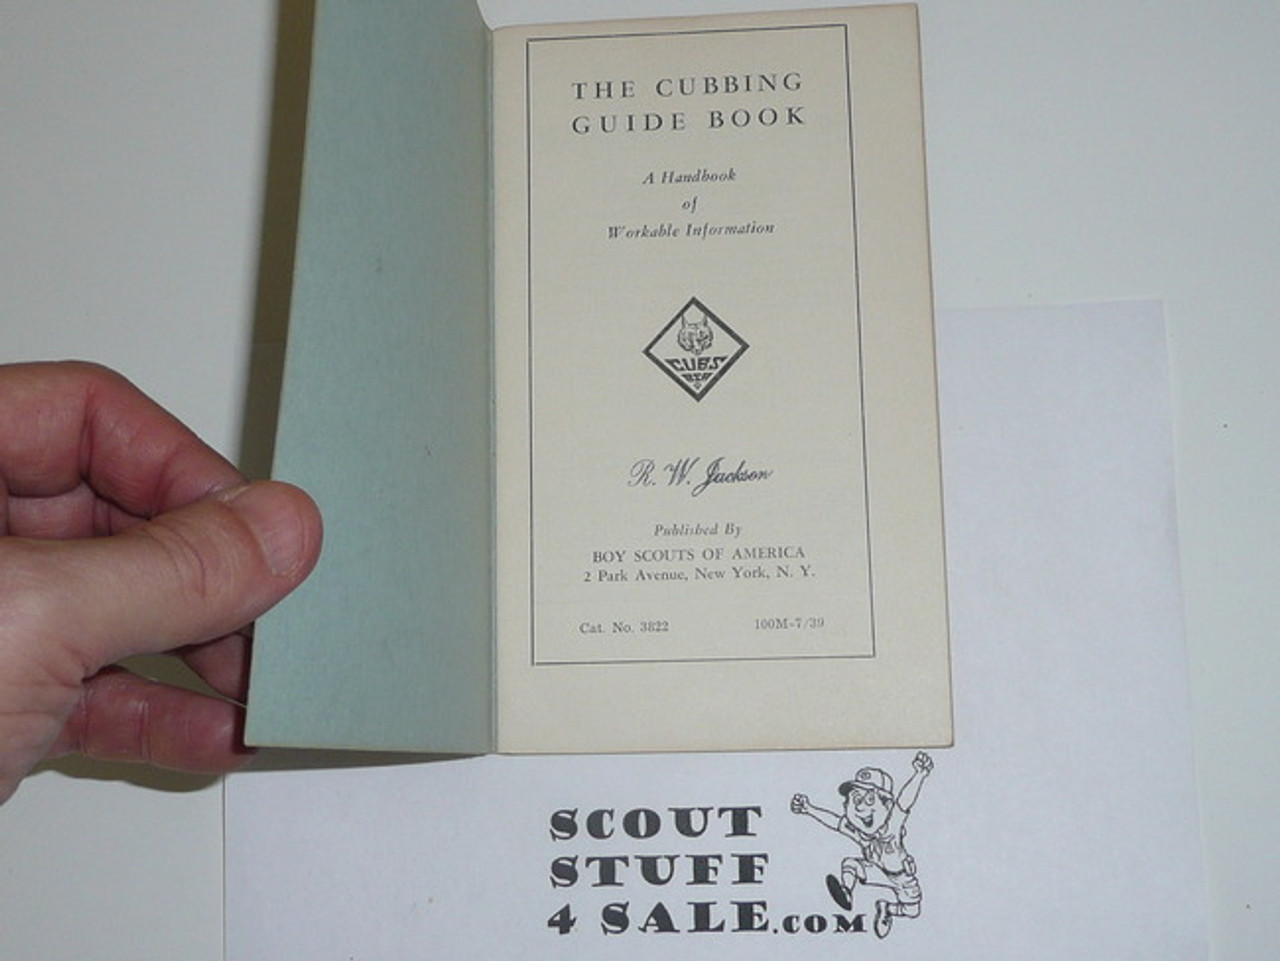 1939 The Cubbing Guidebook, 7-39 Printing